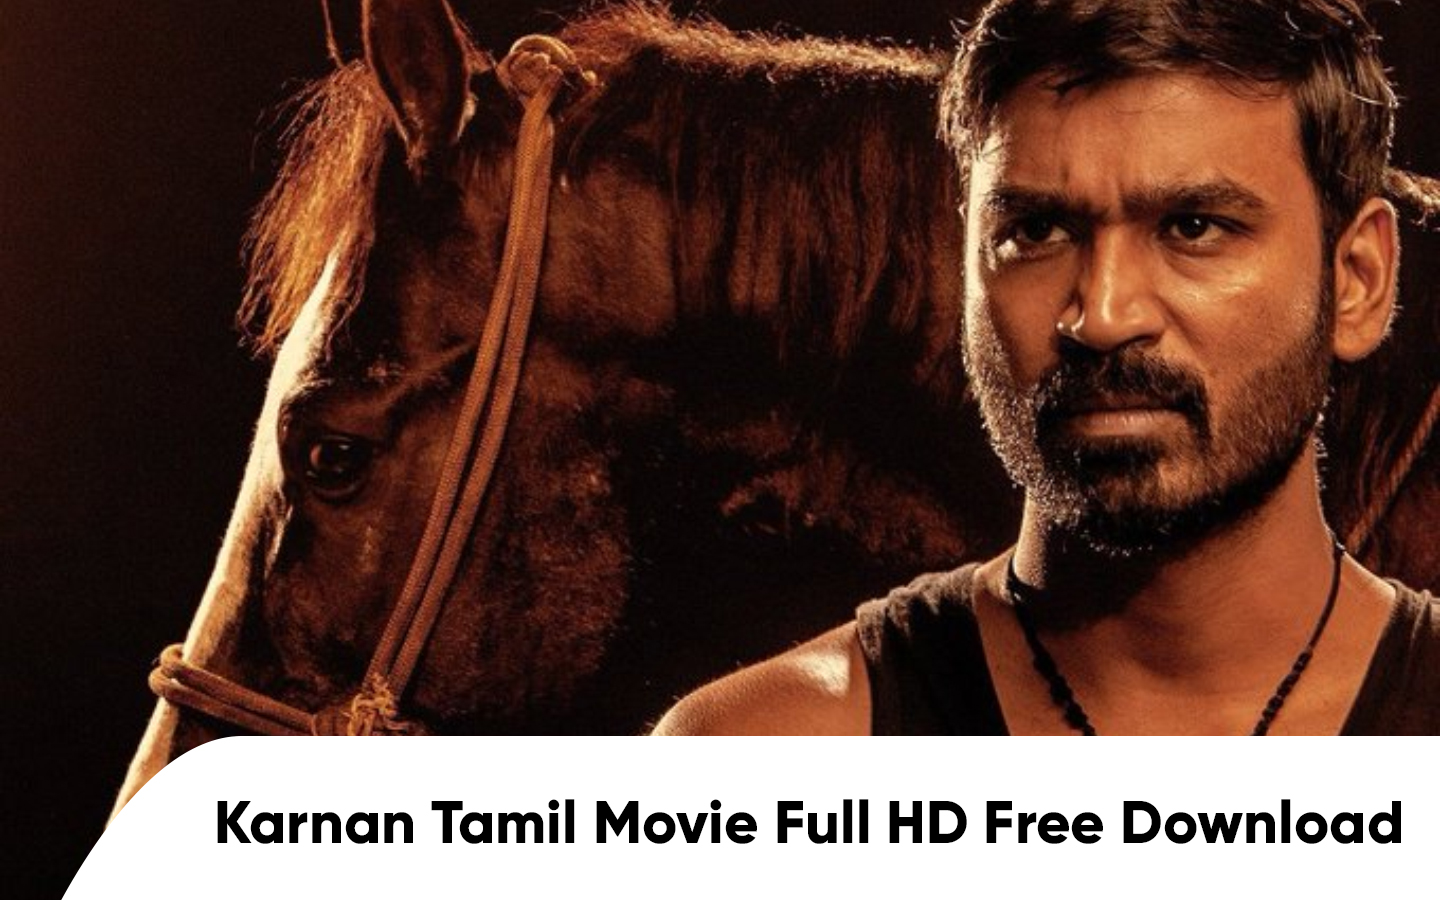 tamil movies free download sites